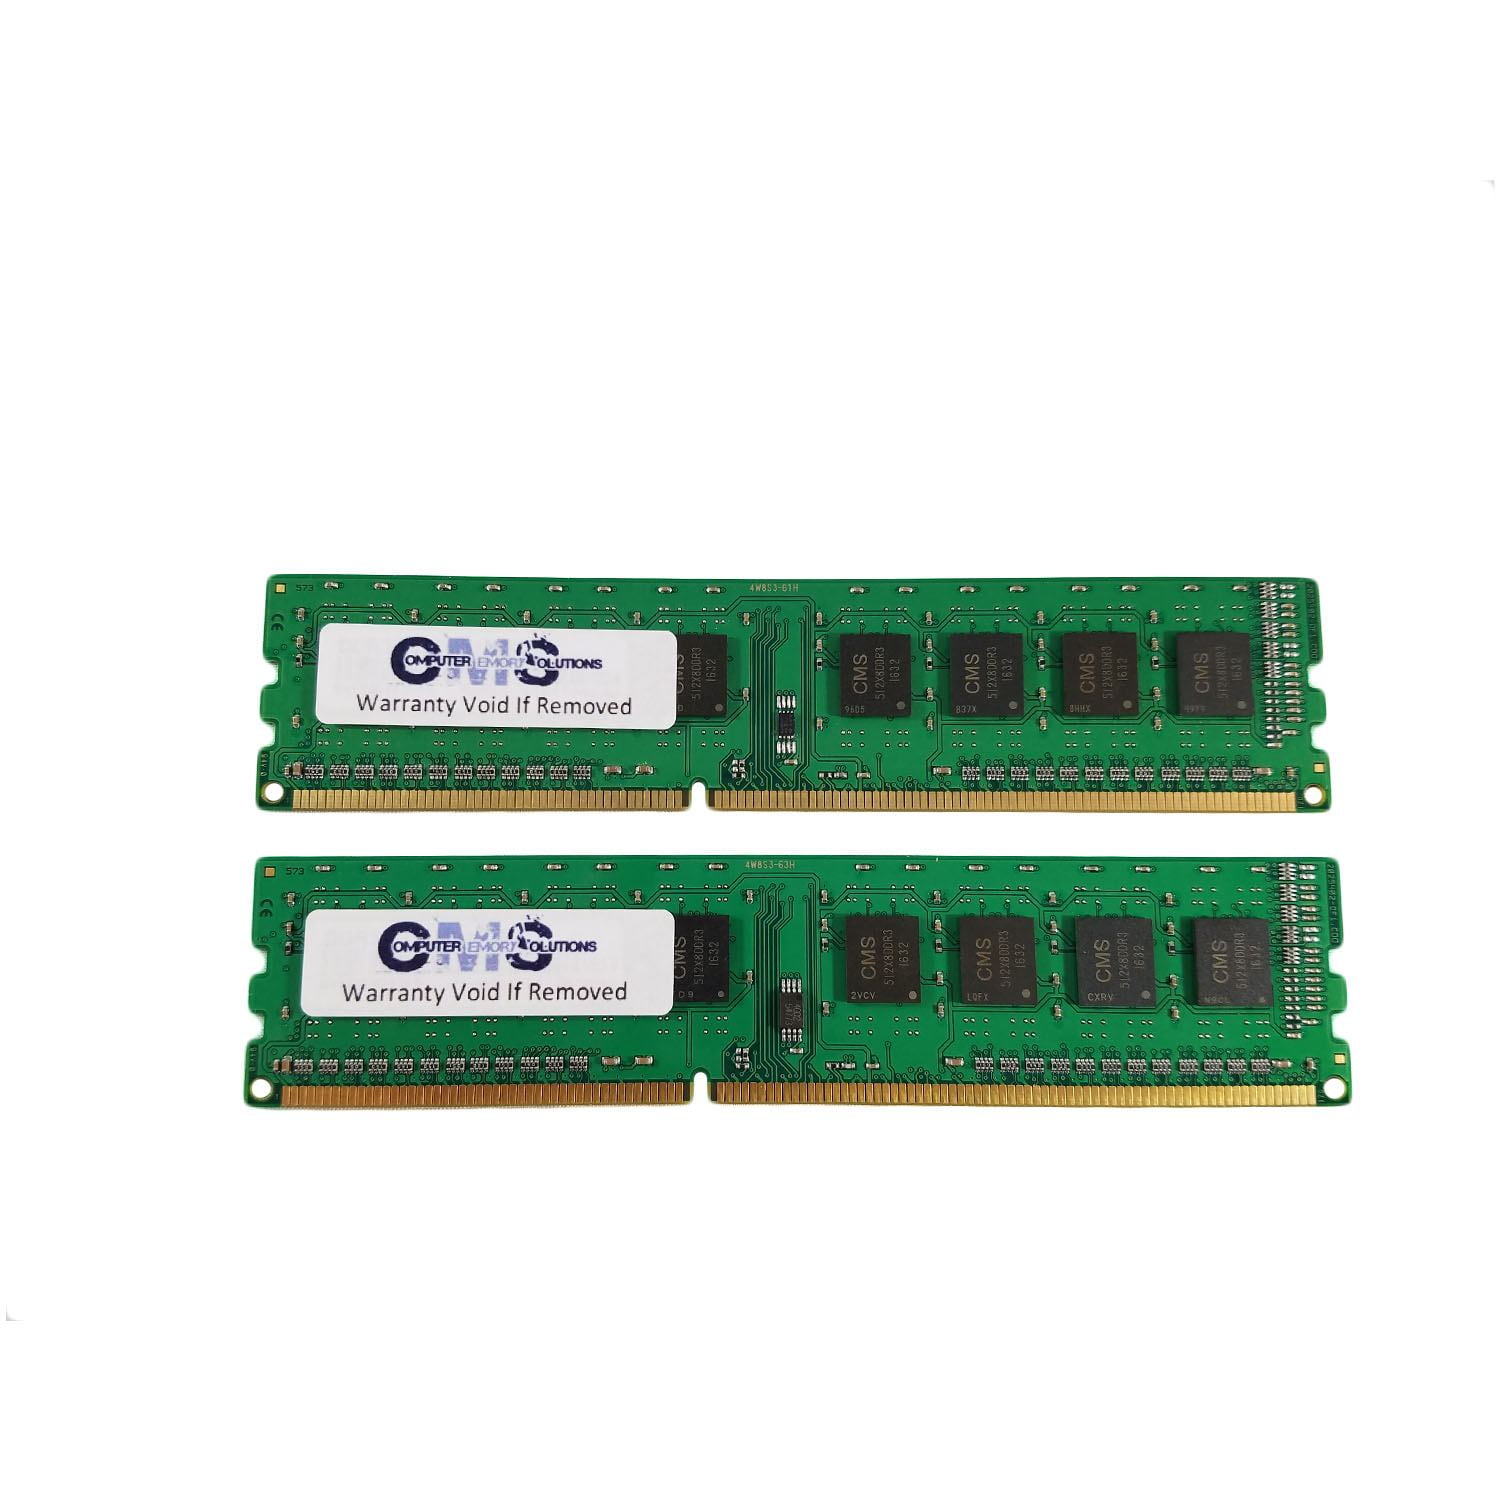 DT/MT/SFF/USFF - 980 390 7010 A-Tech 8GB RAM Kit for Dell OptiPlex 9010 990 3010 DDR3 1333MHz PC3-10600 Non-ECC DIMM Memory Upgrade 2 x 4GB 790